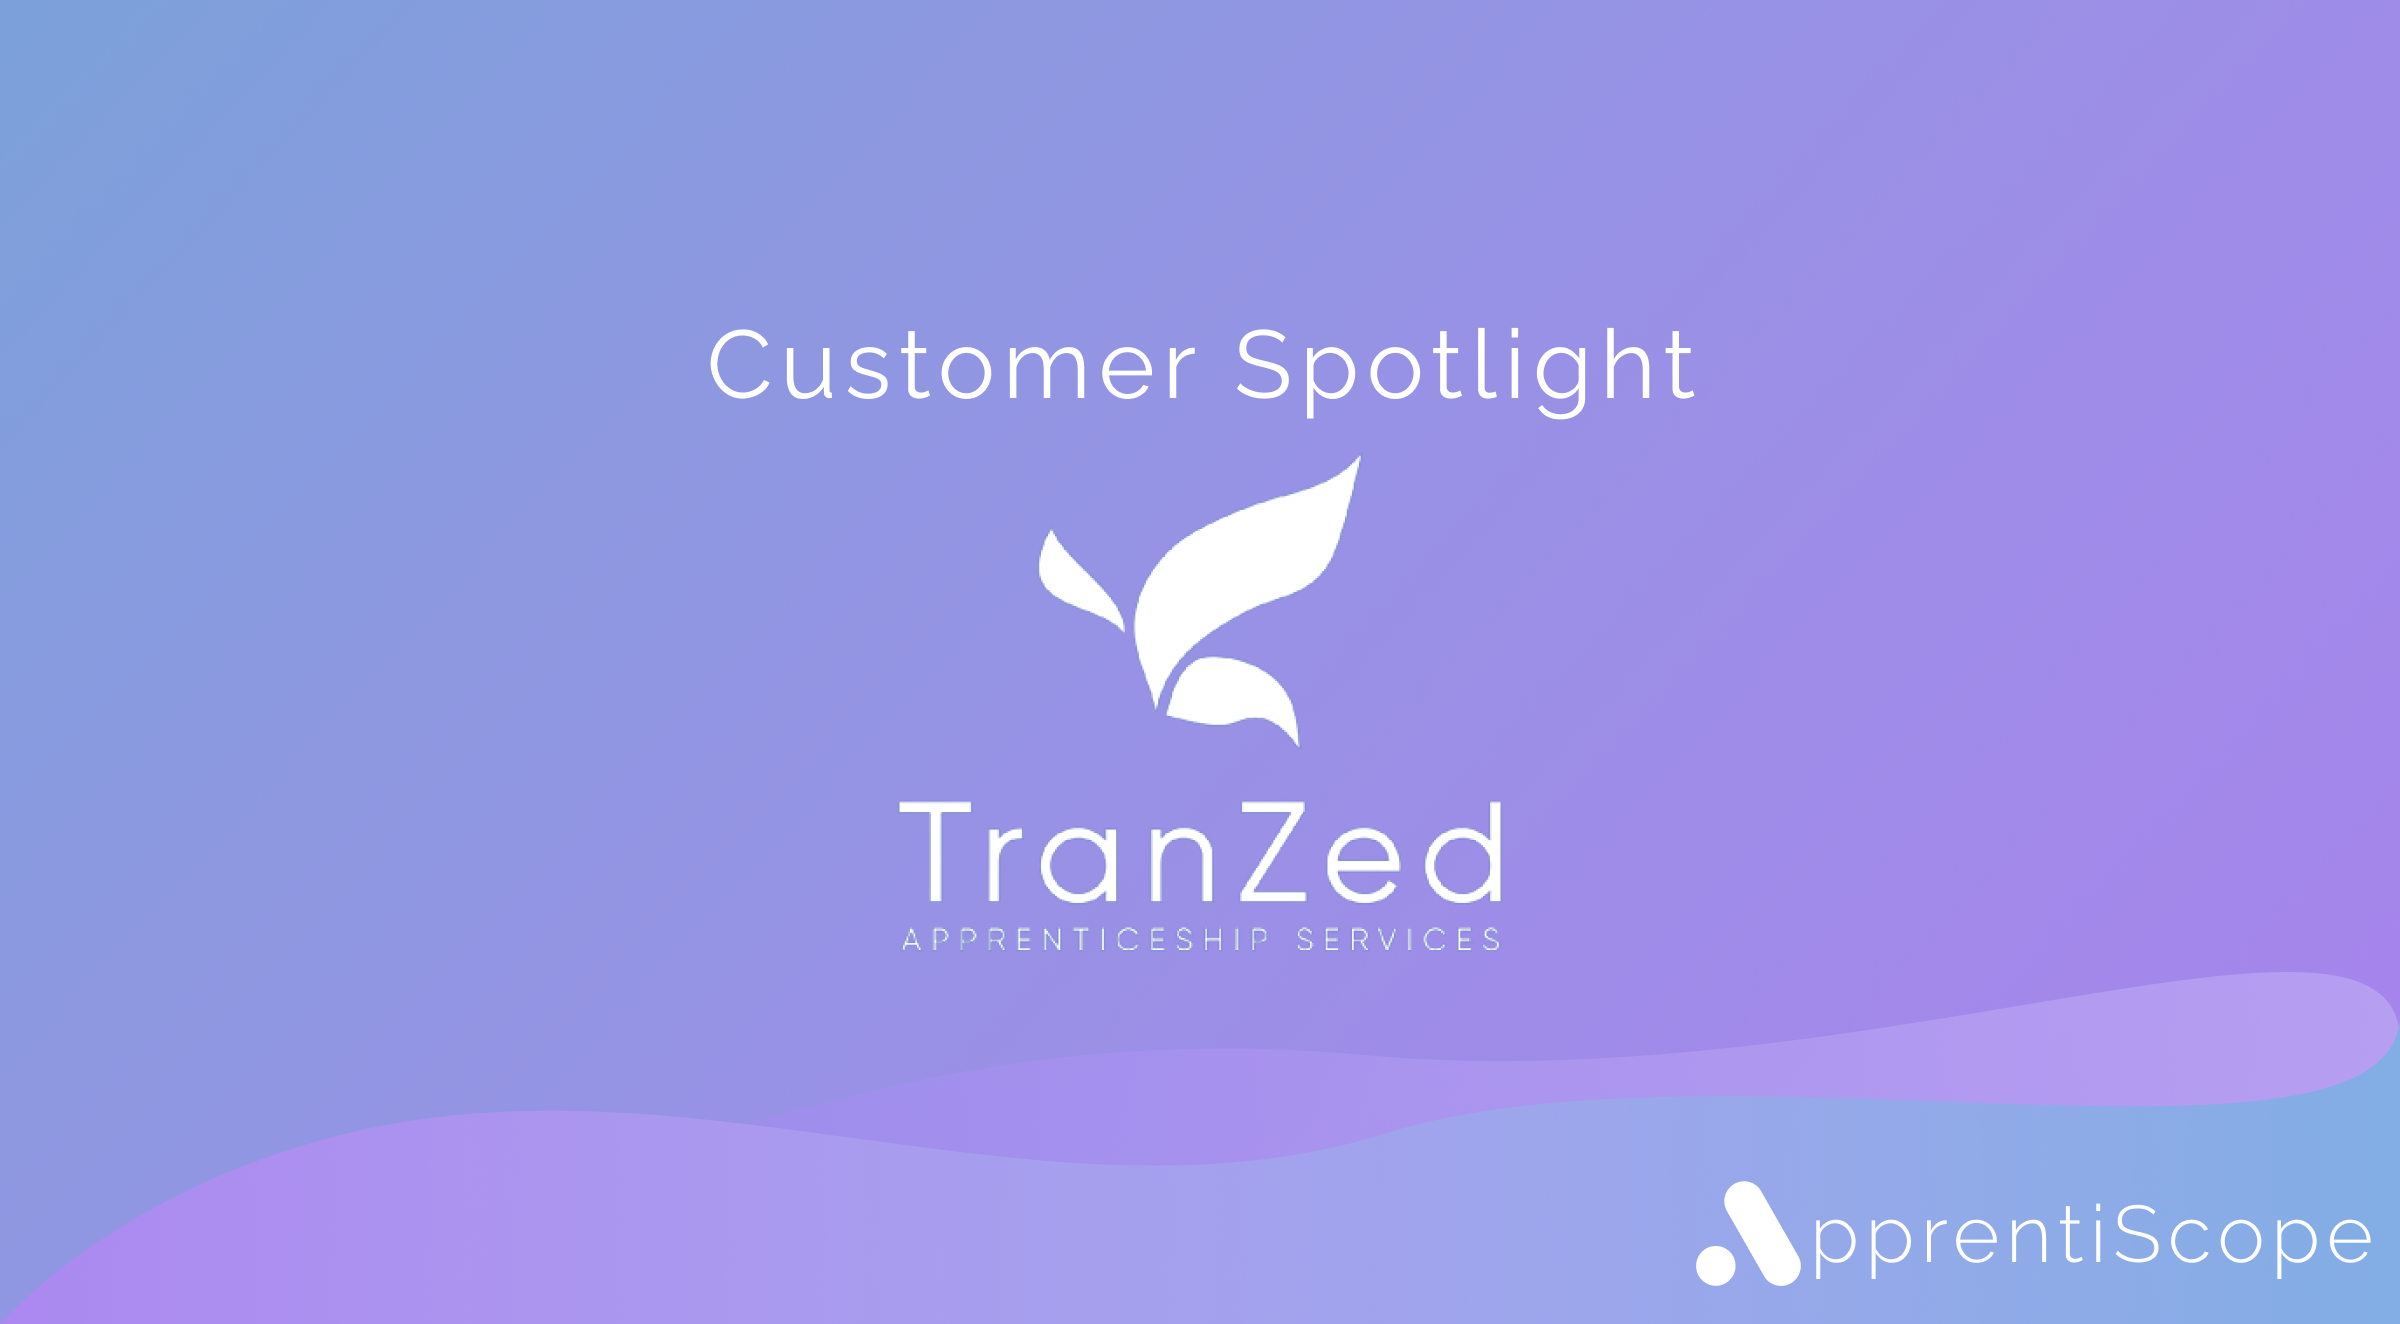 TranZed customer spotlight asset.